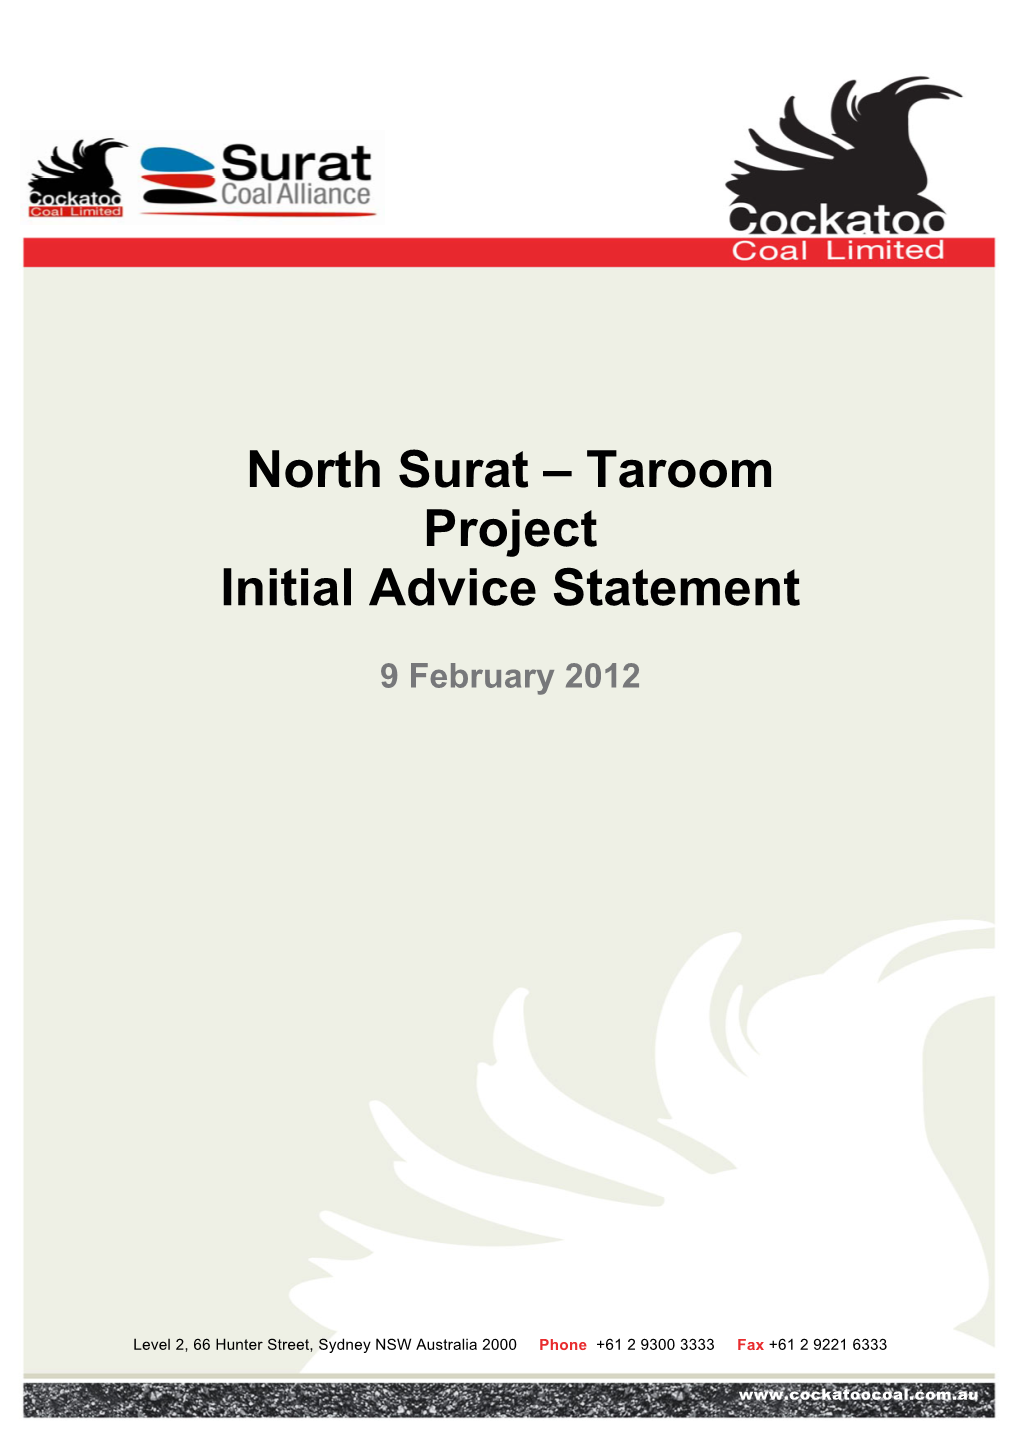 North Surat – Taroom Project Initial Advice Statement